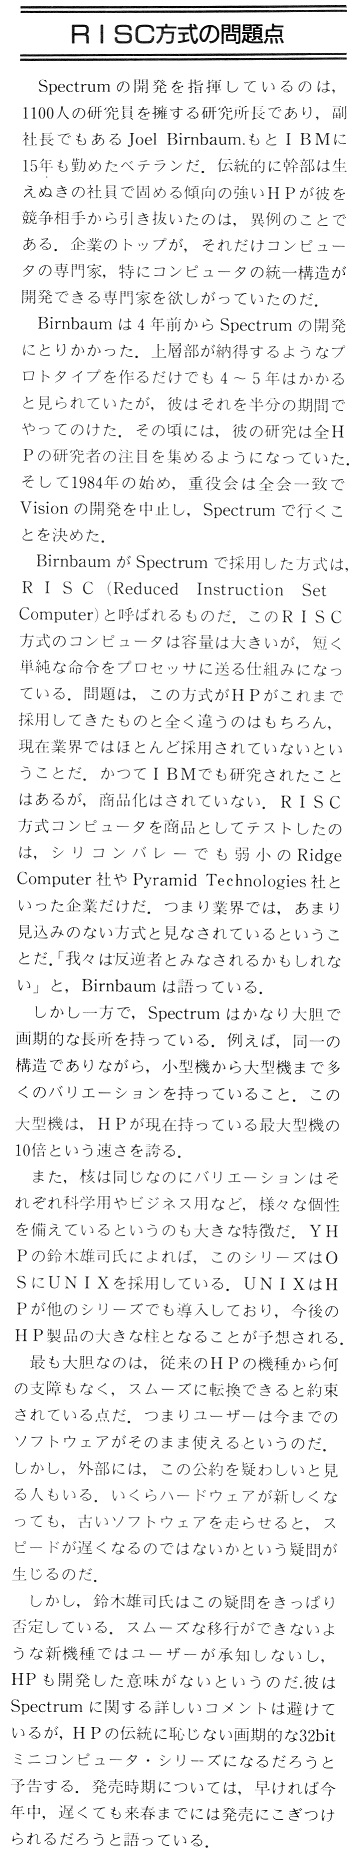 ASCII1985(09)c03海外企業研究HP08抜粋RISC_W355.jpg